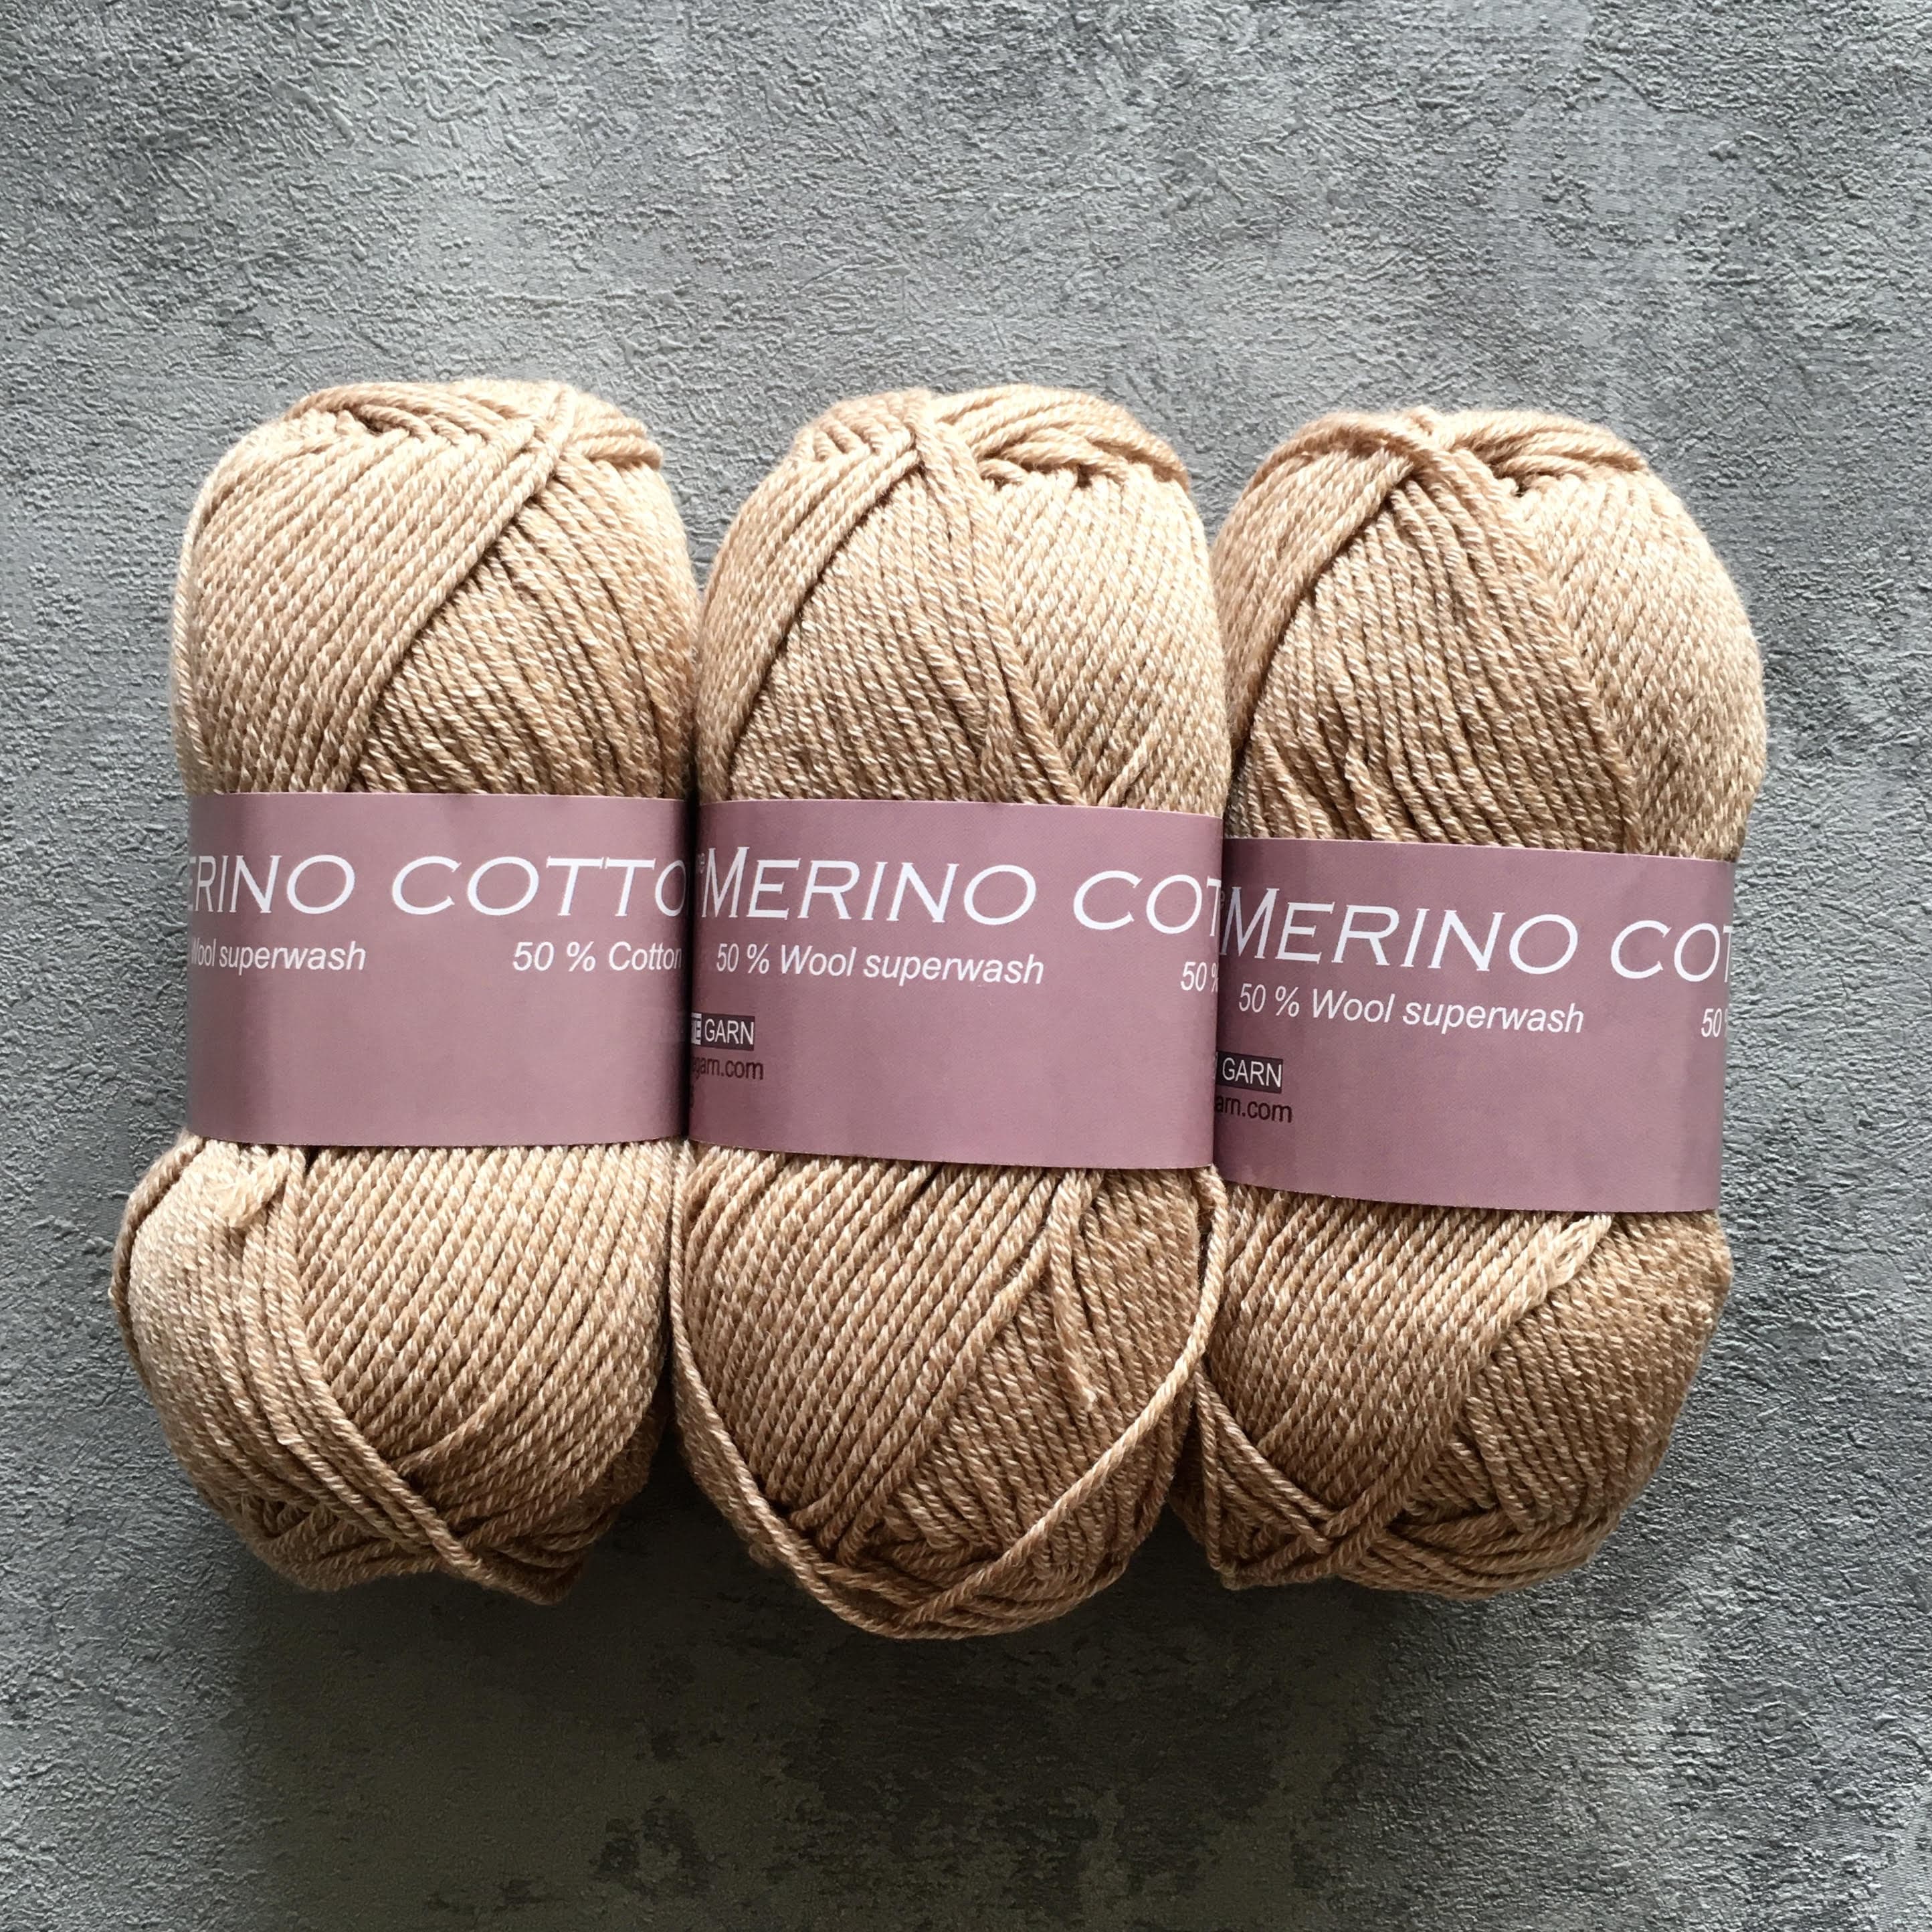 Merino Cotton by Hjerte Garn